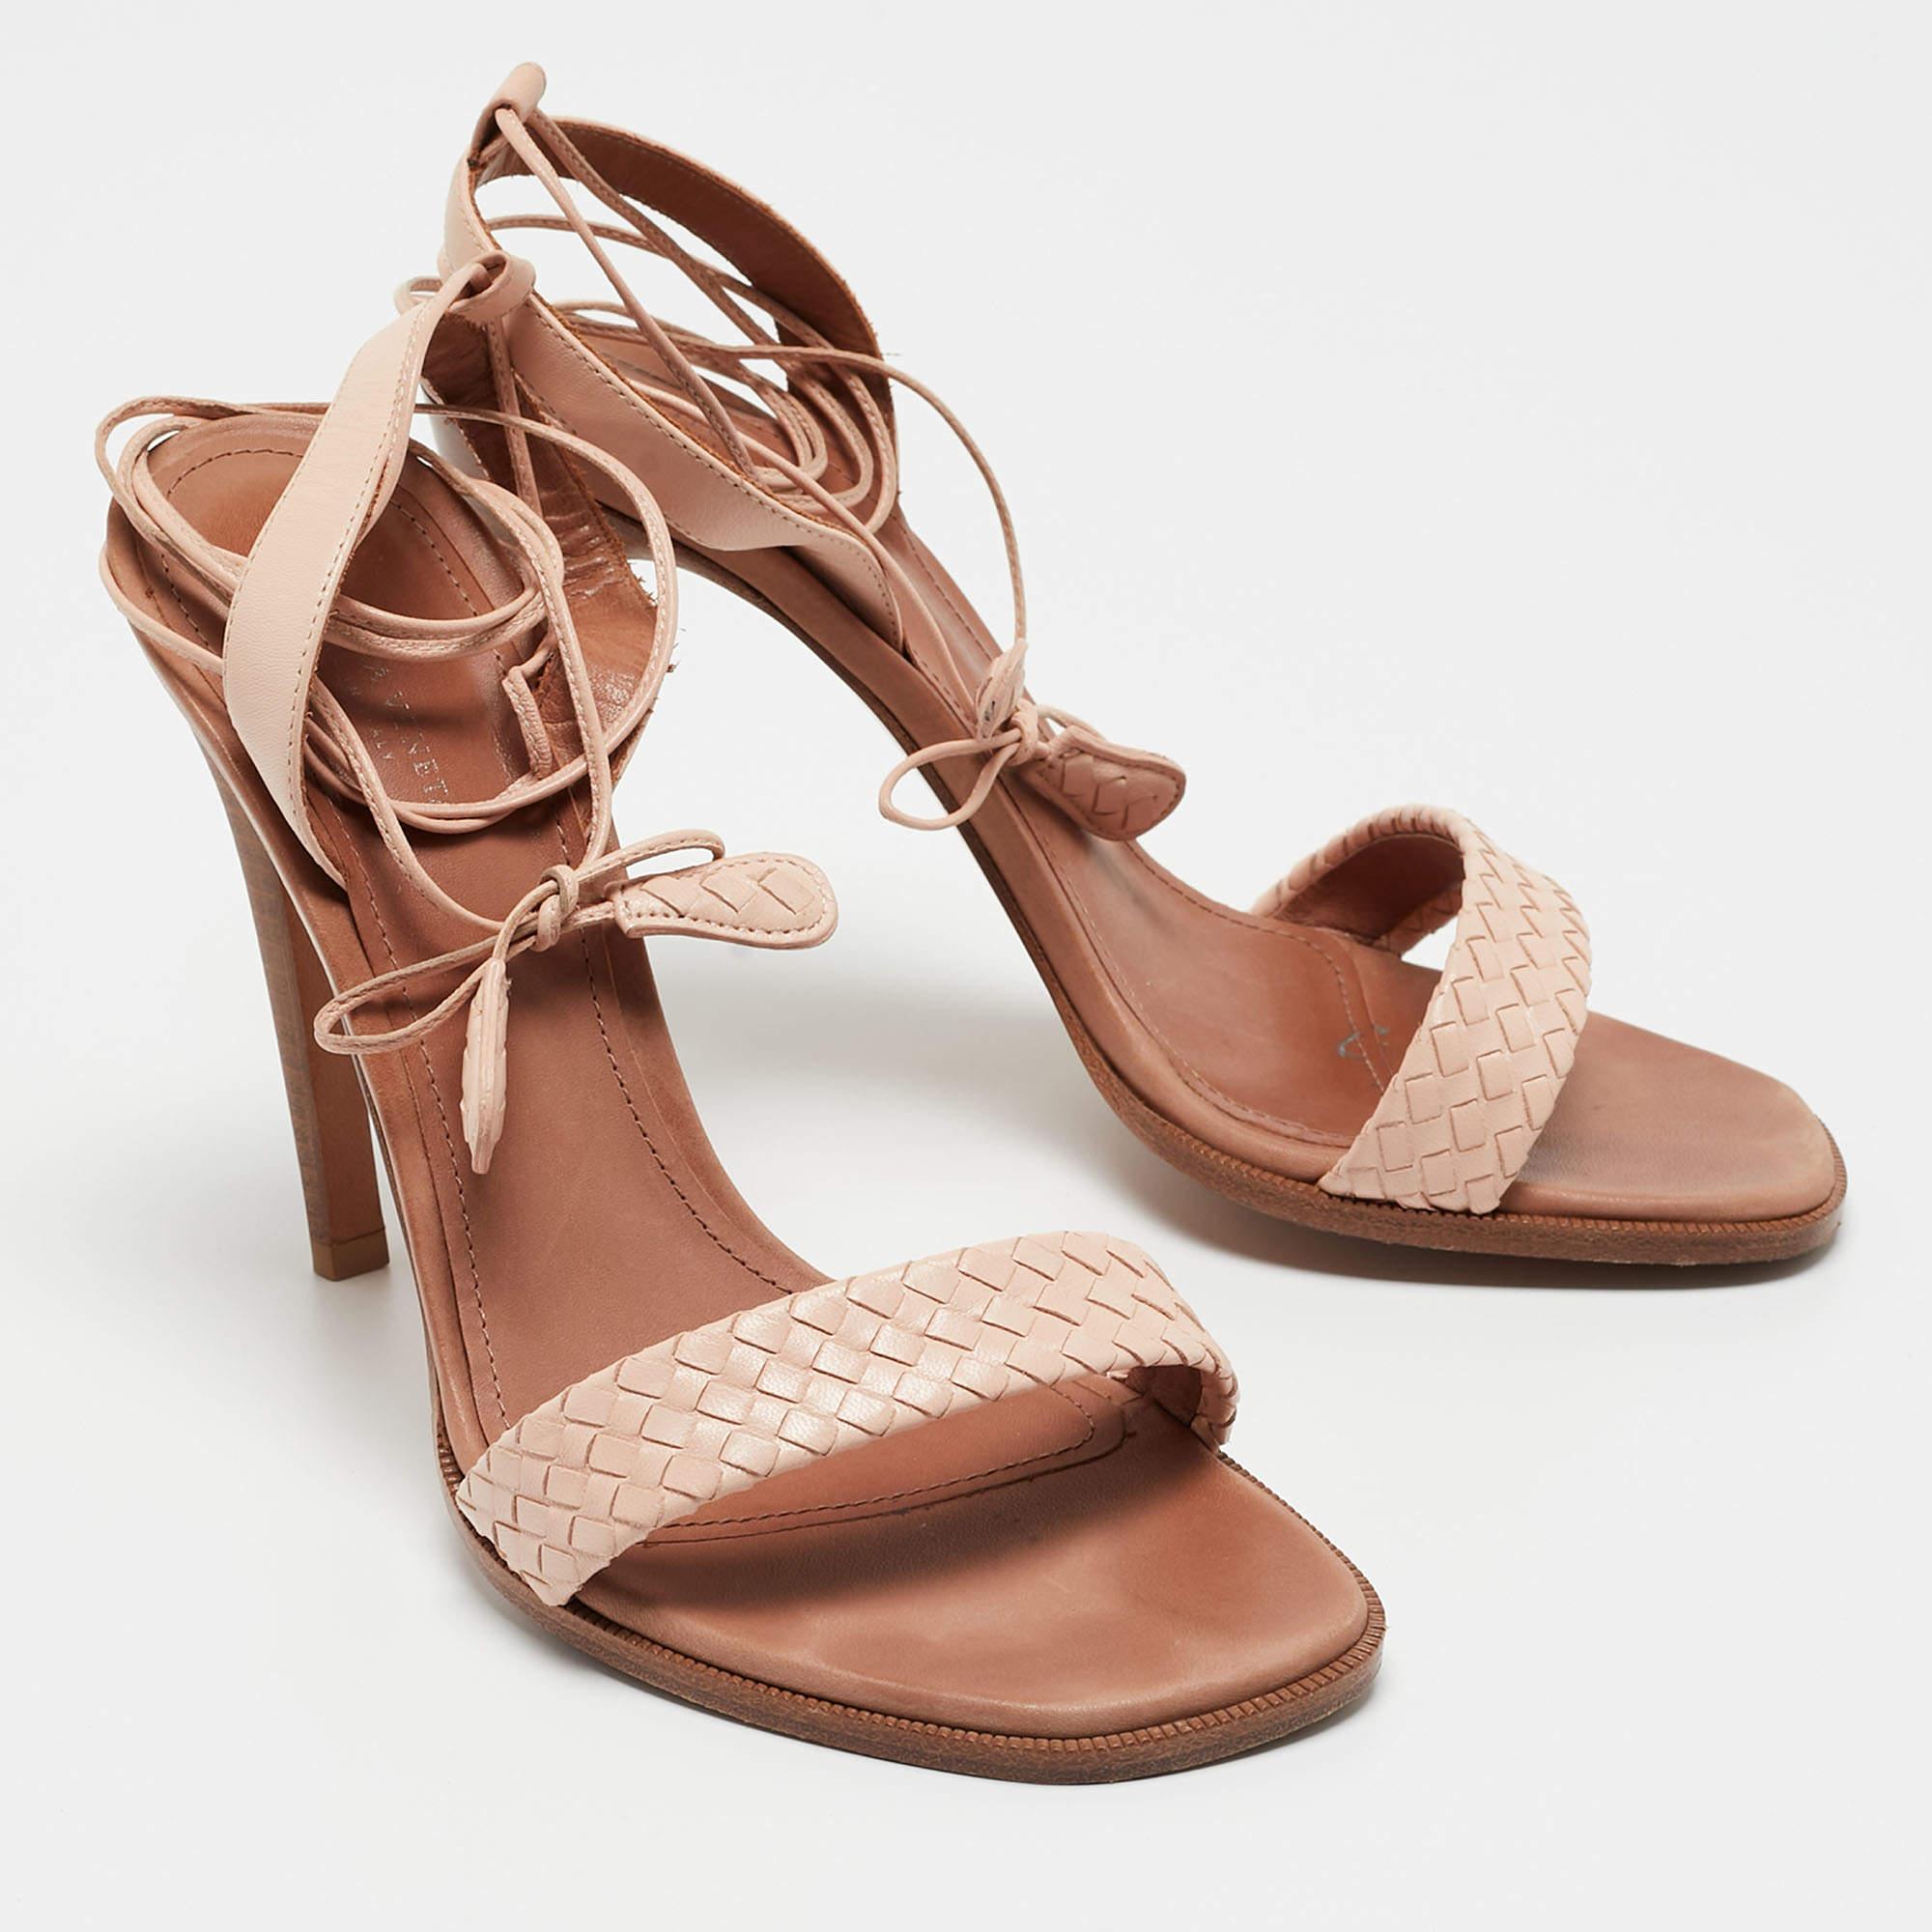 Bottega Veneta Light Pink Leather Ankle Tie Sandals Size 38.5 1